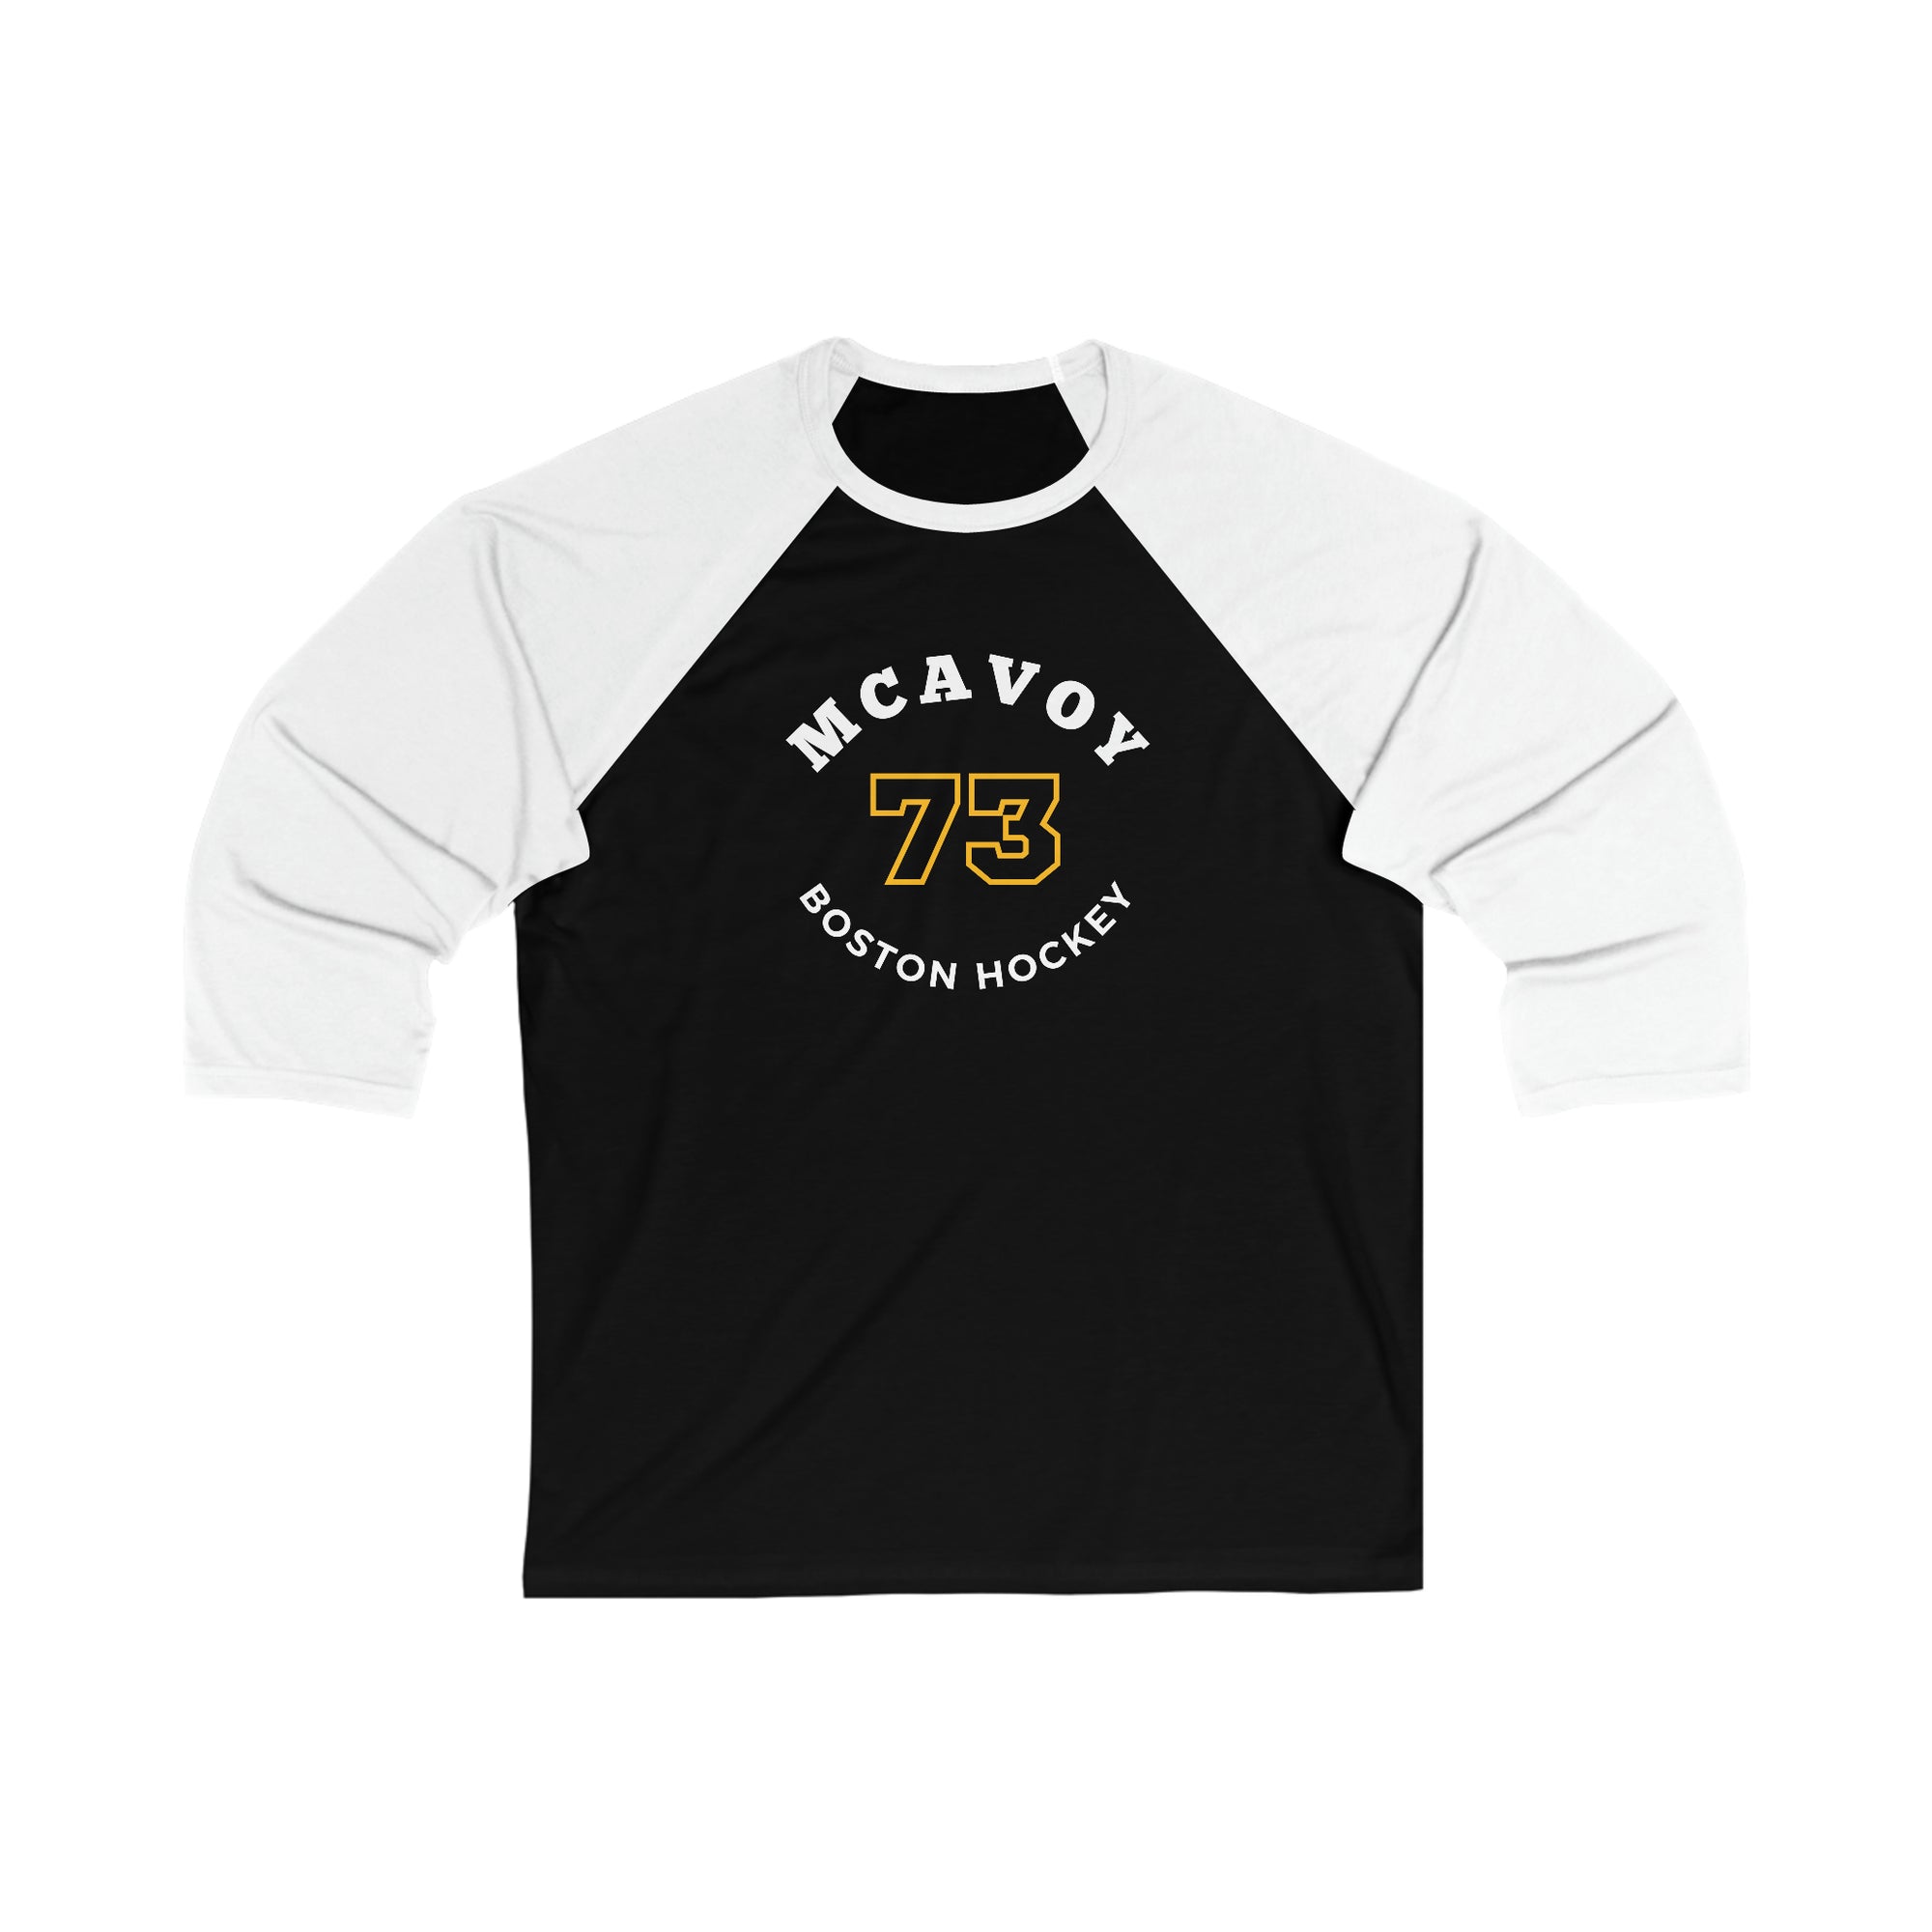 McAvoy 73 Boston Hockey Number Arch Design Unisex Tri-Blend 3/4 Sleeve Raglan Baseball Shirt